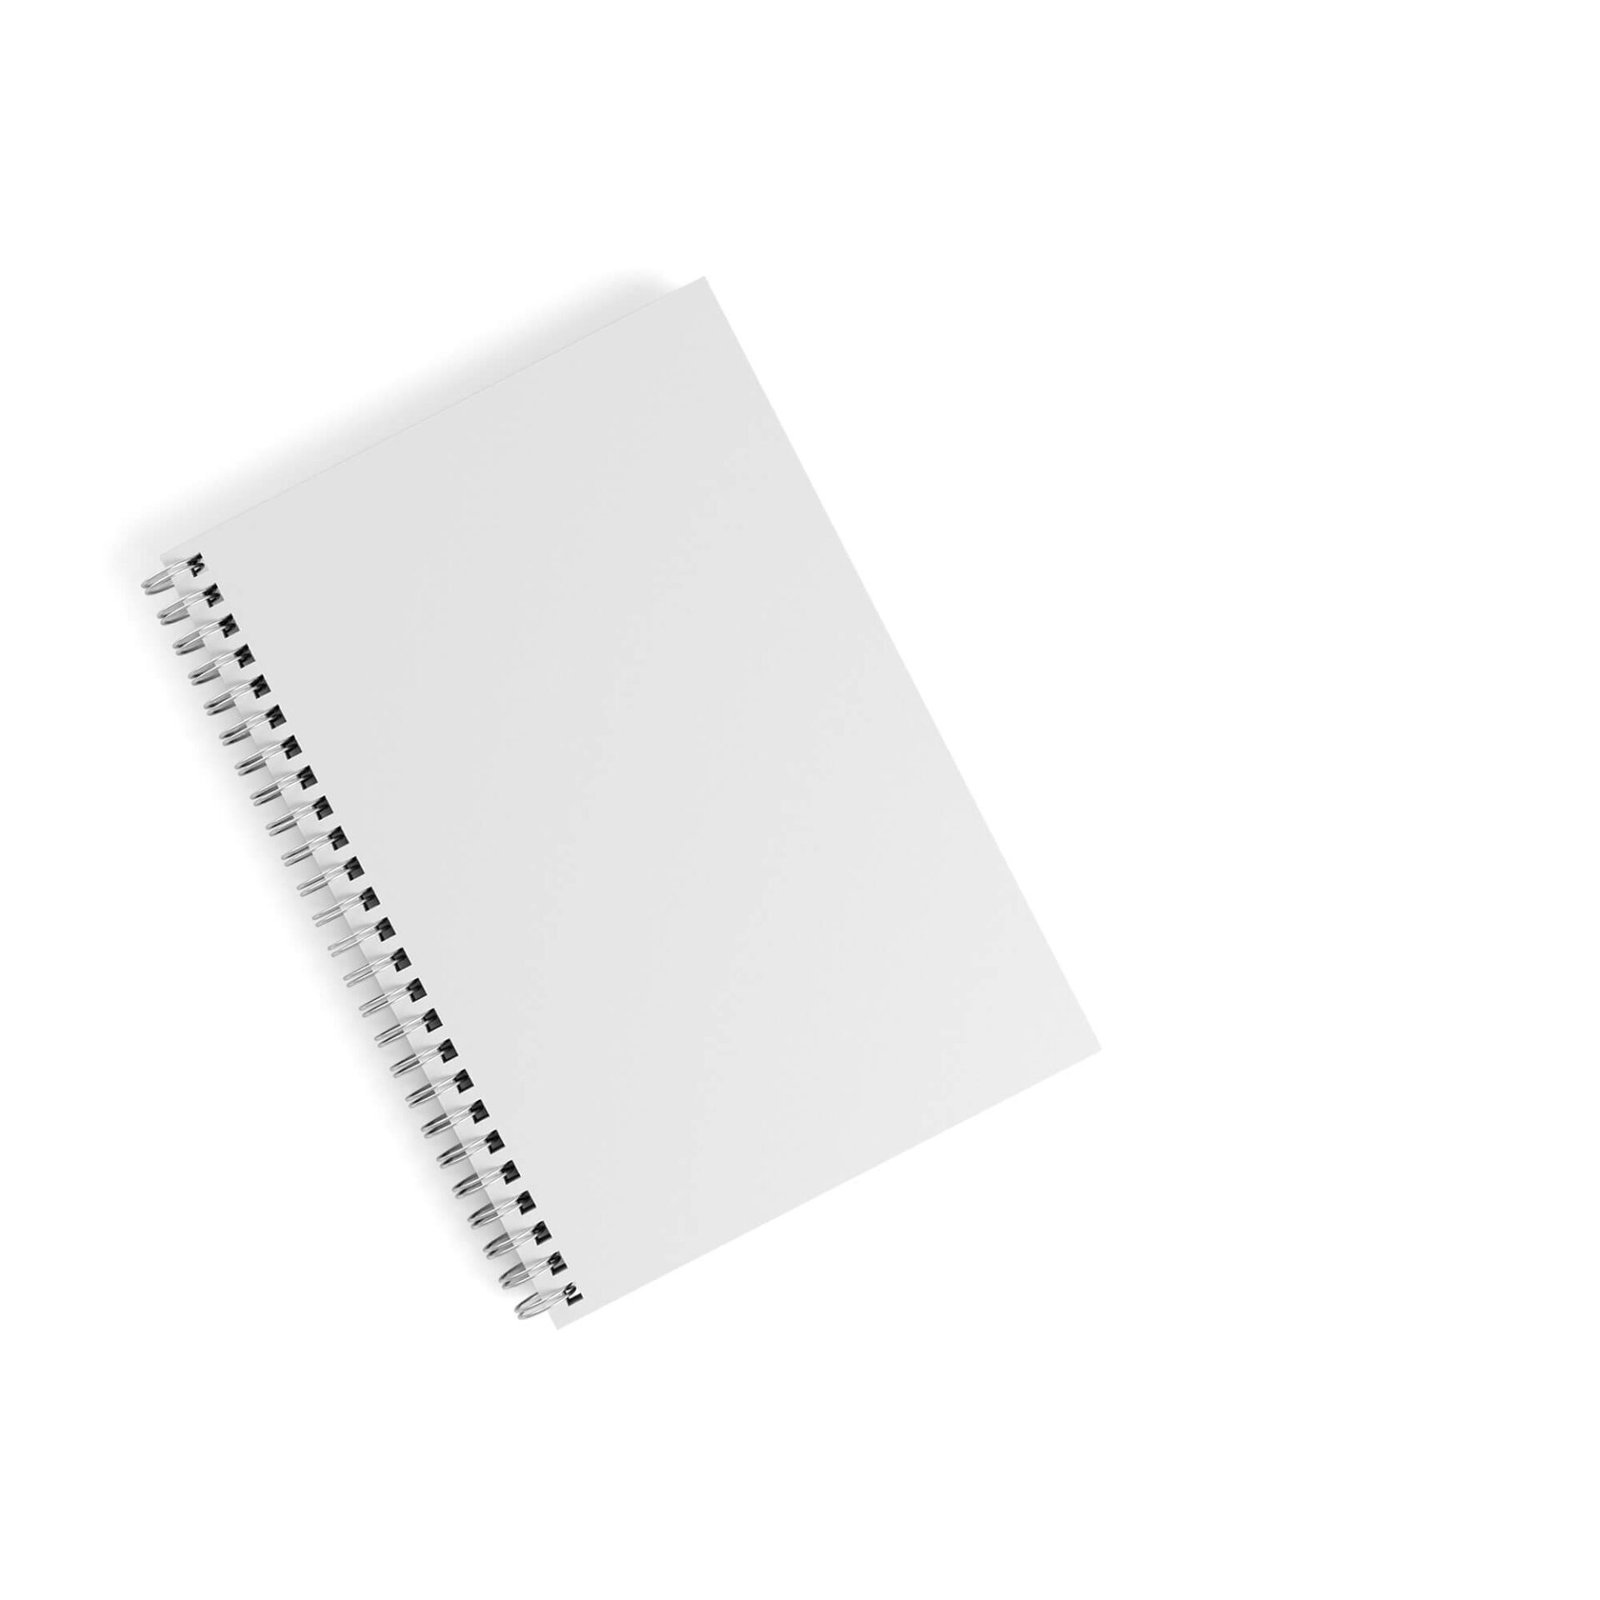 Free A6 Spiral Notebook Mockup PSD